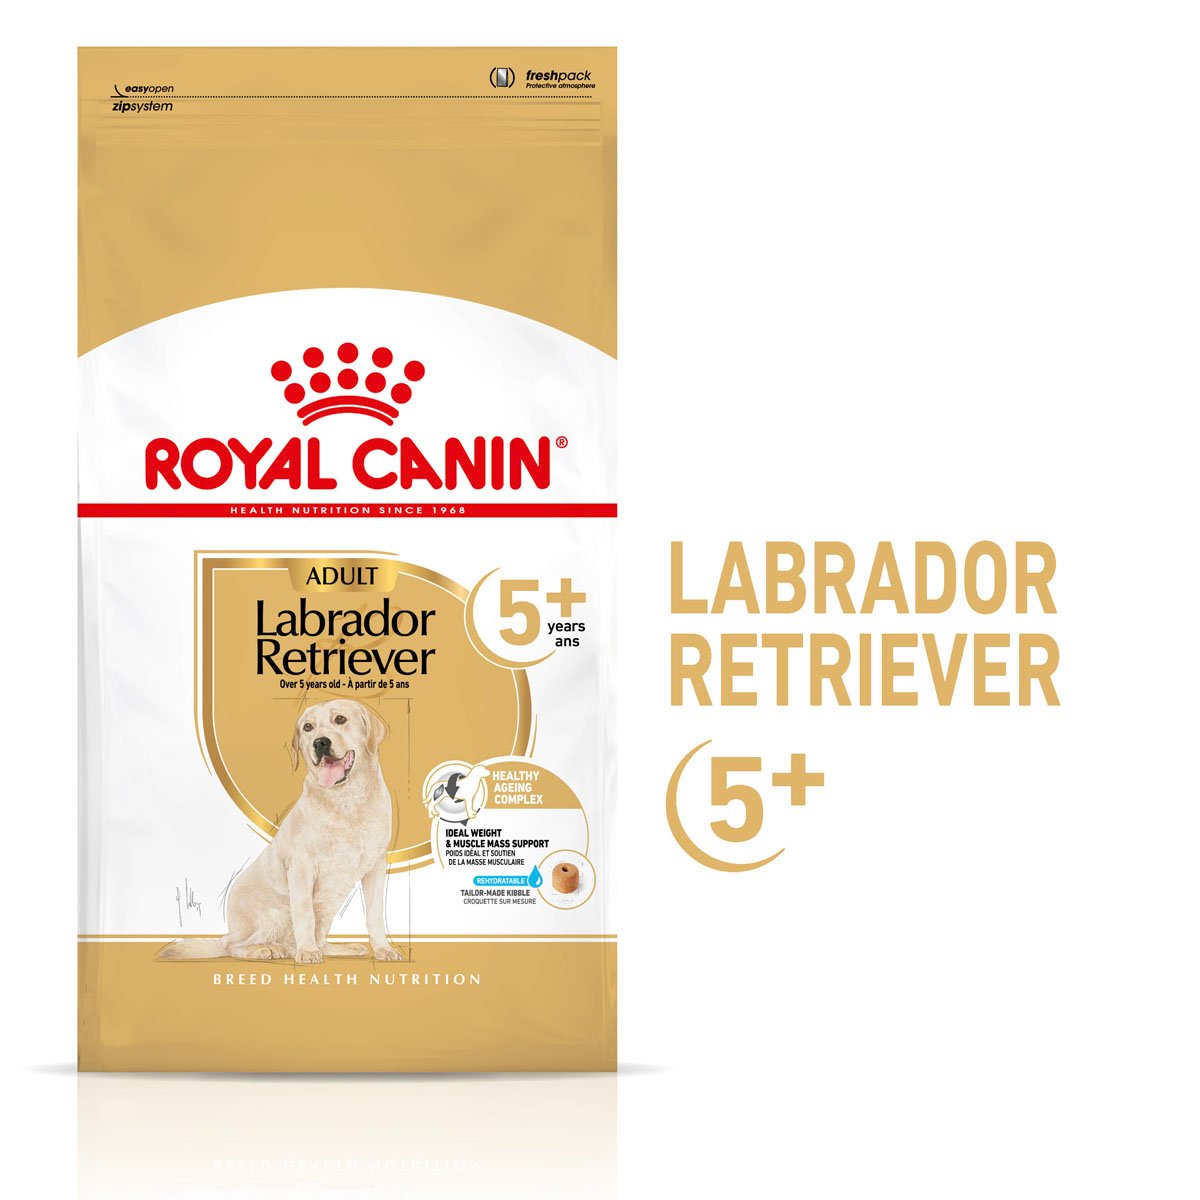 ROYAL CANIN Labrador Retriever Adult 5+ Trockenfutter für Hunde ab 5 Jahren 12kg von Royal Canin